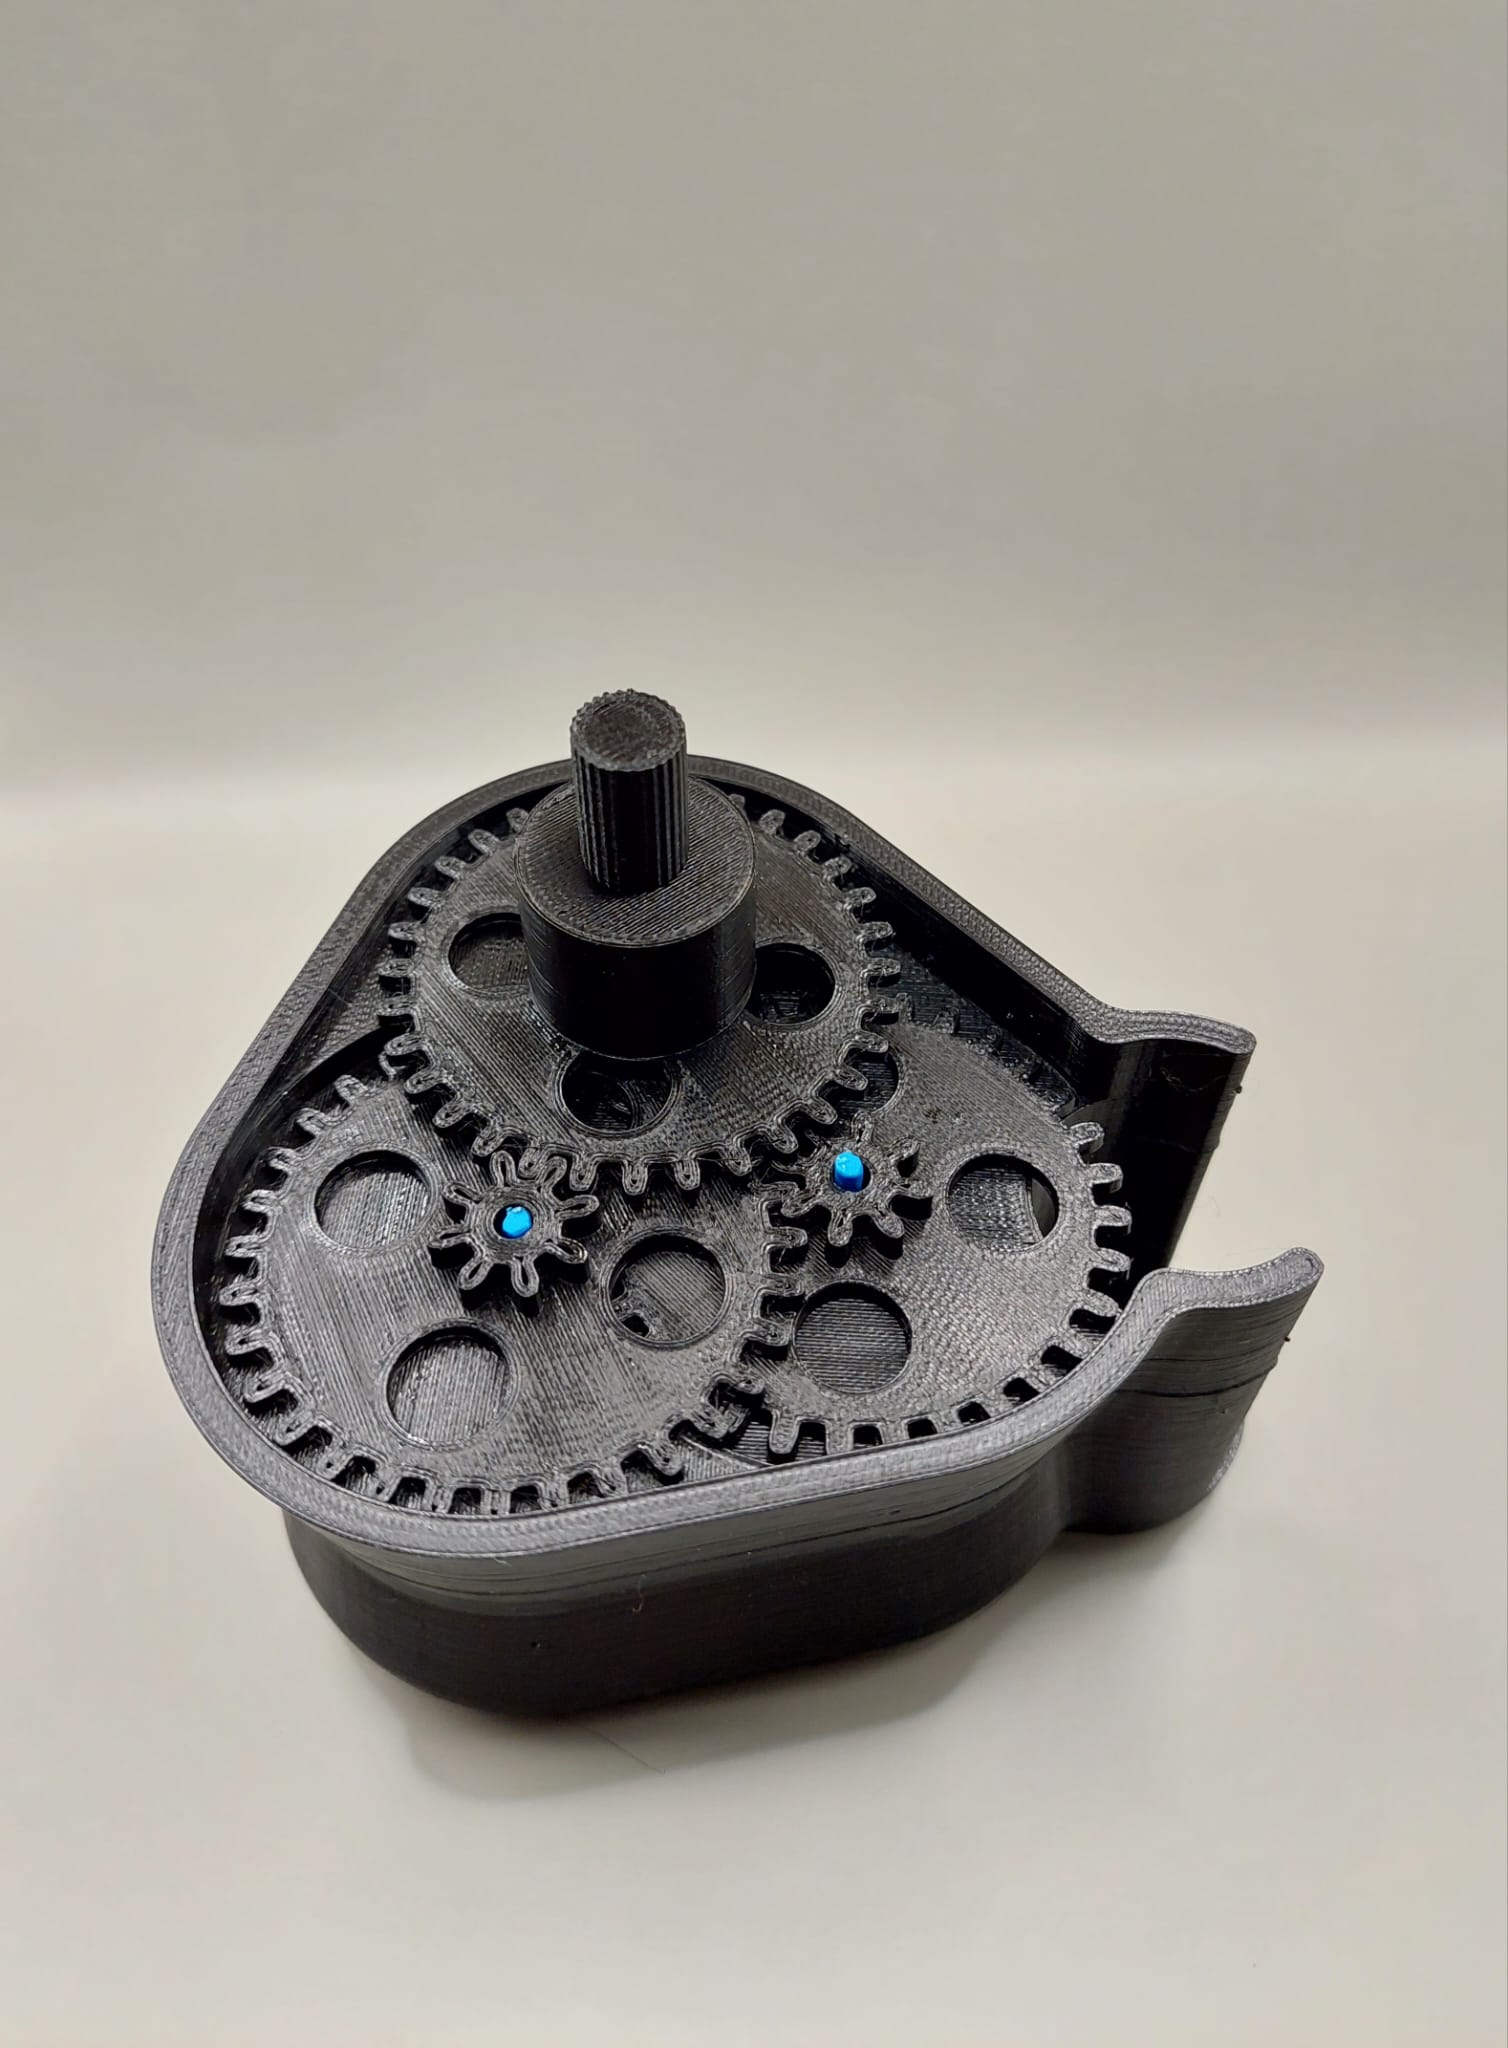 Reductor mecanic printat 3D